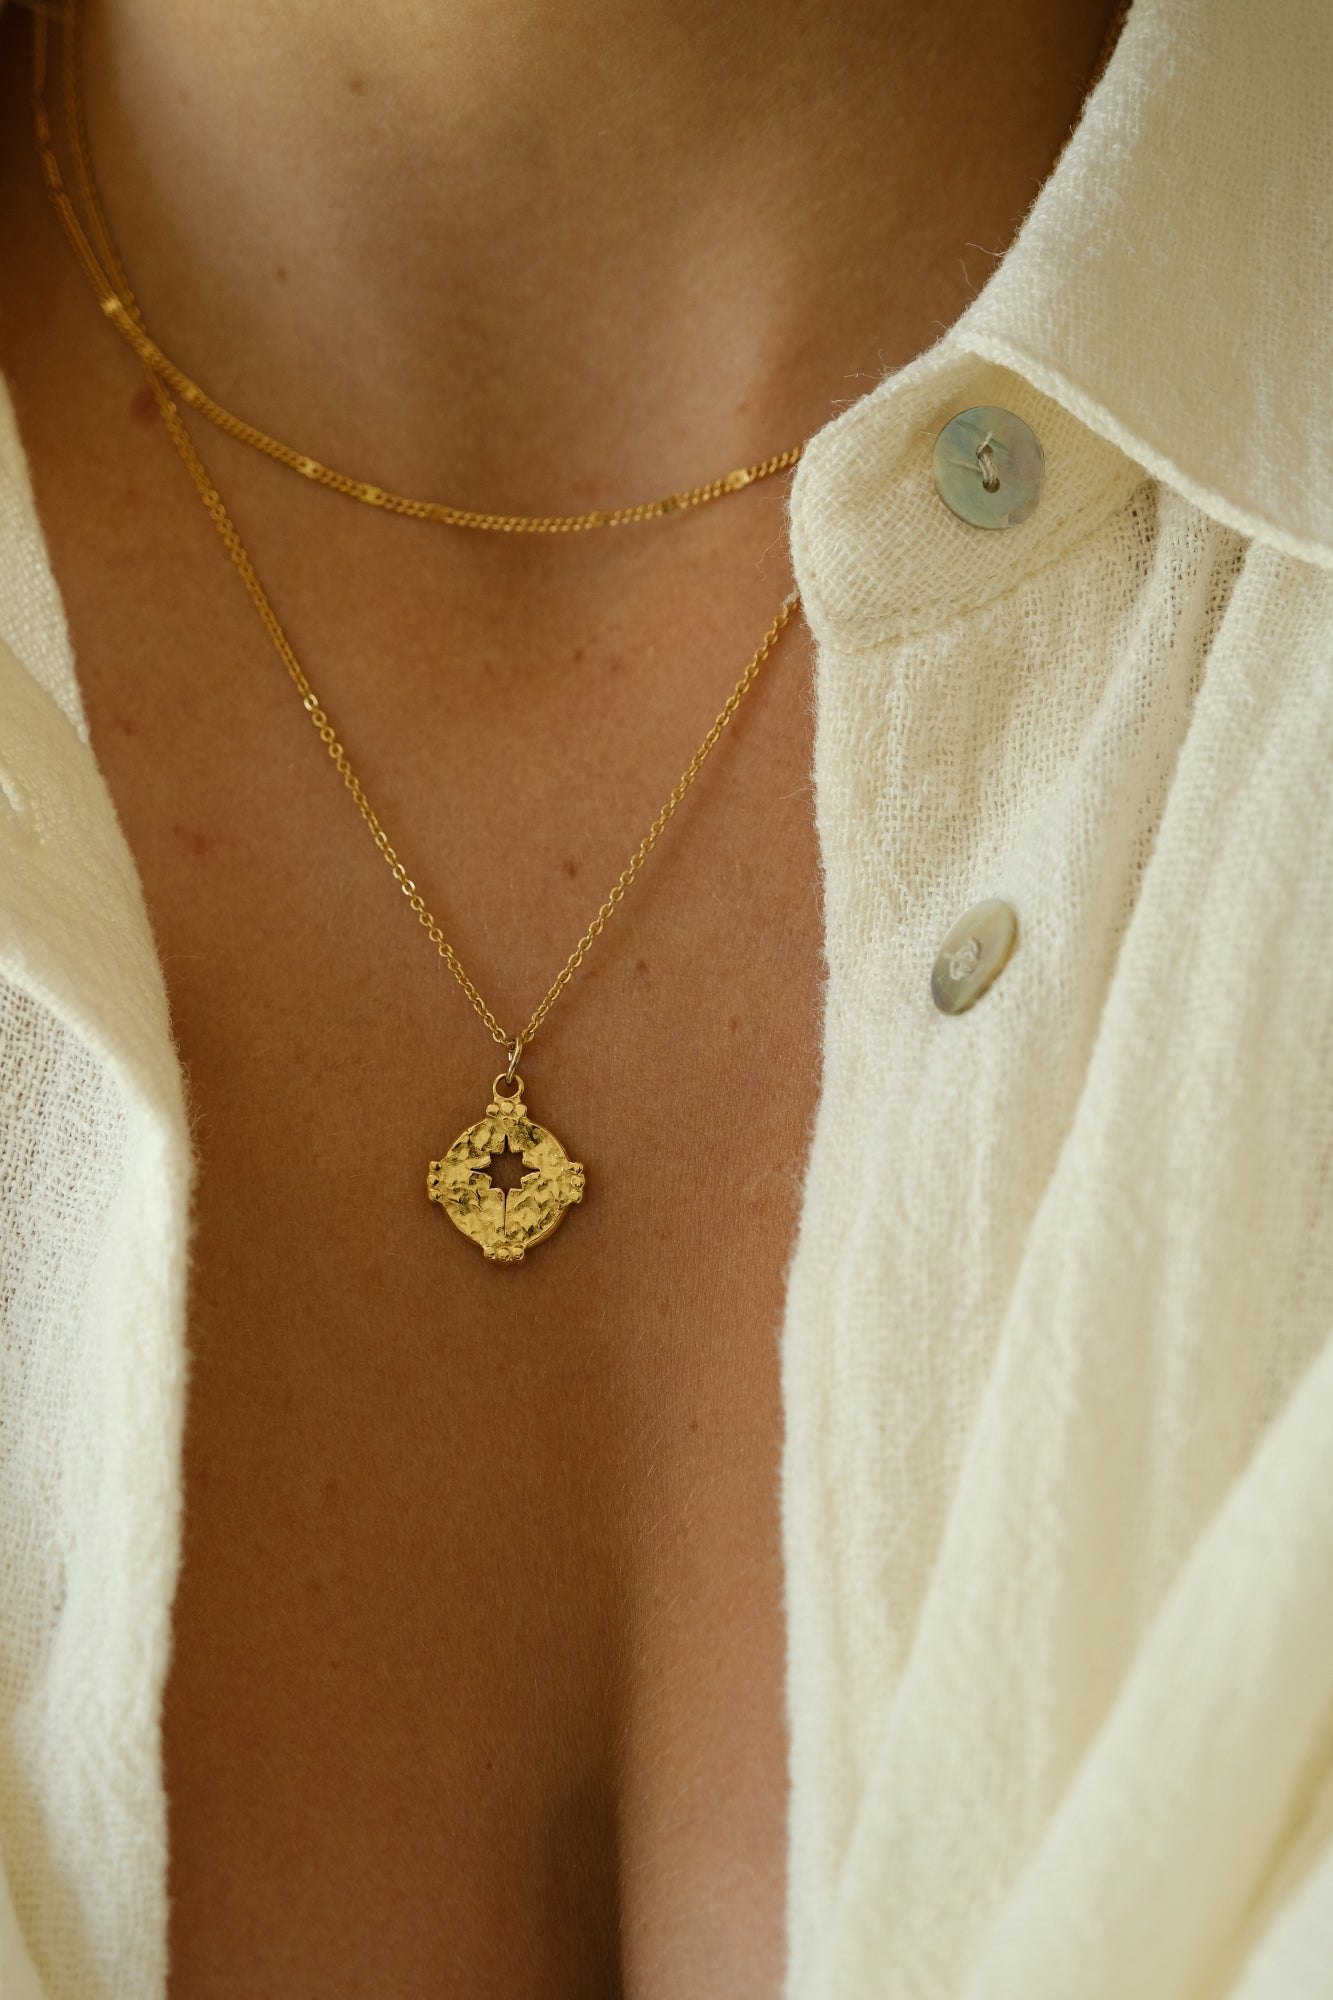 “Wanderlust” necklace